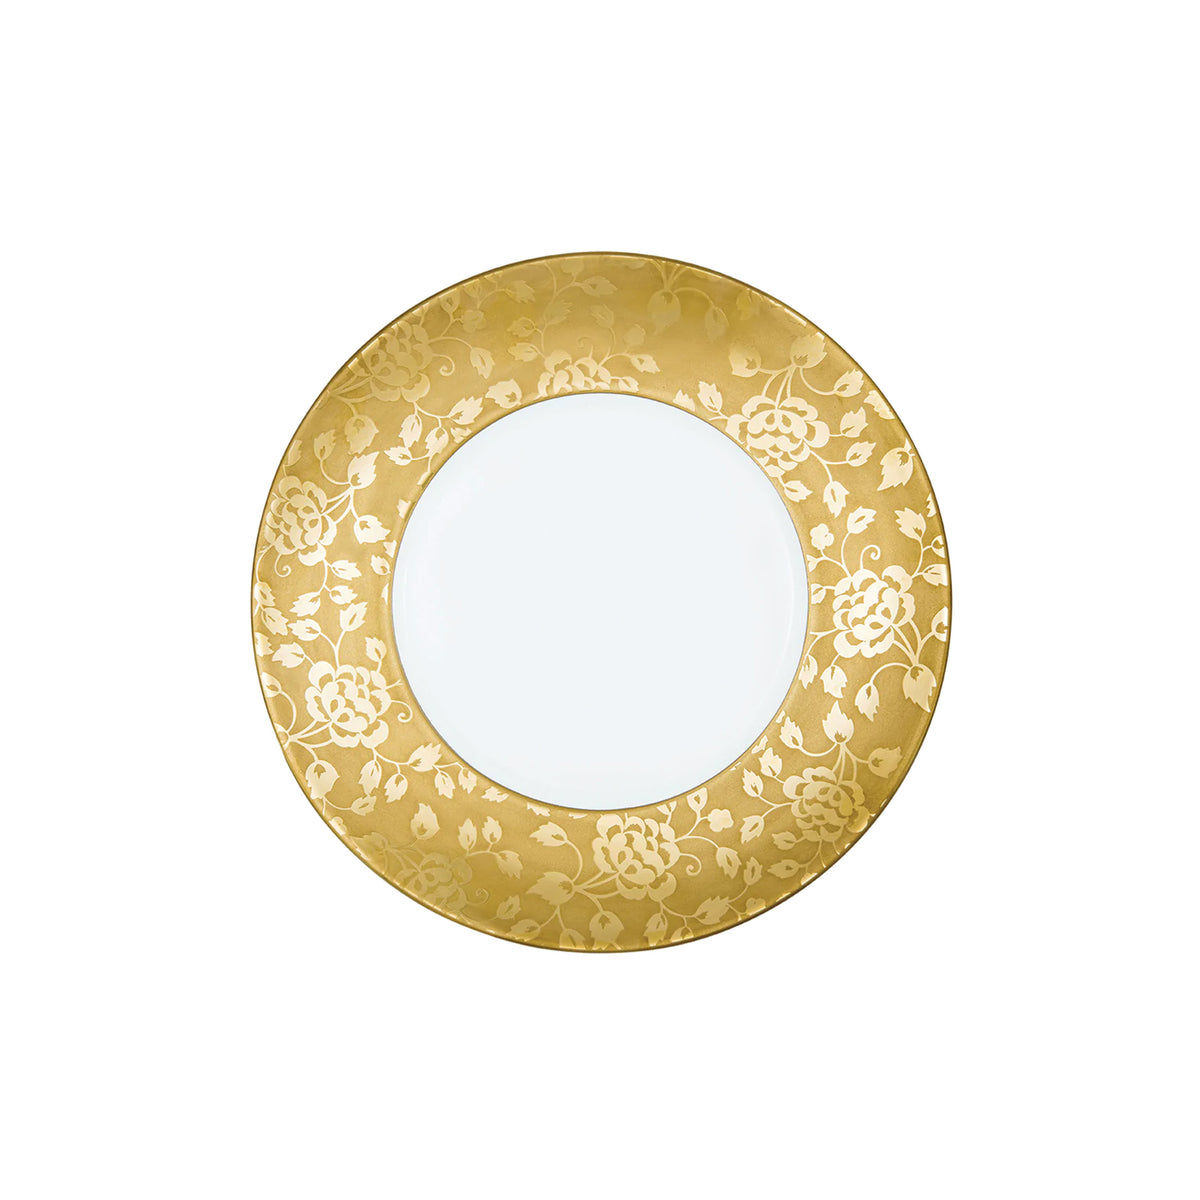 Gold inlaid thistles - Dessert plate